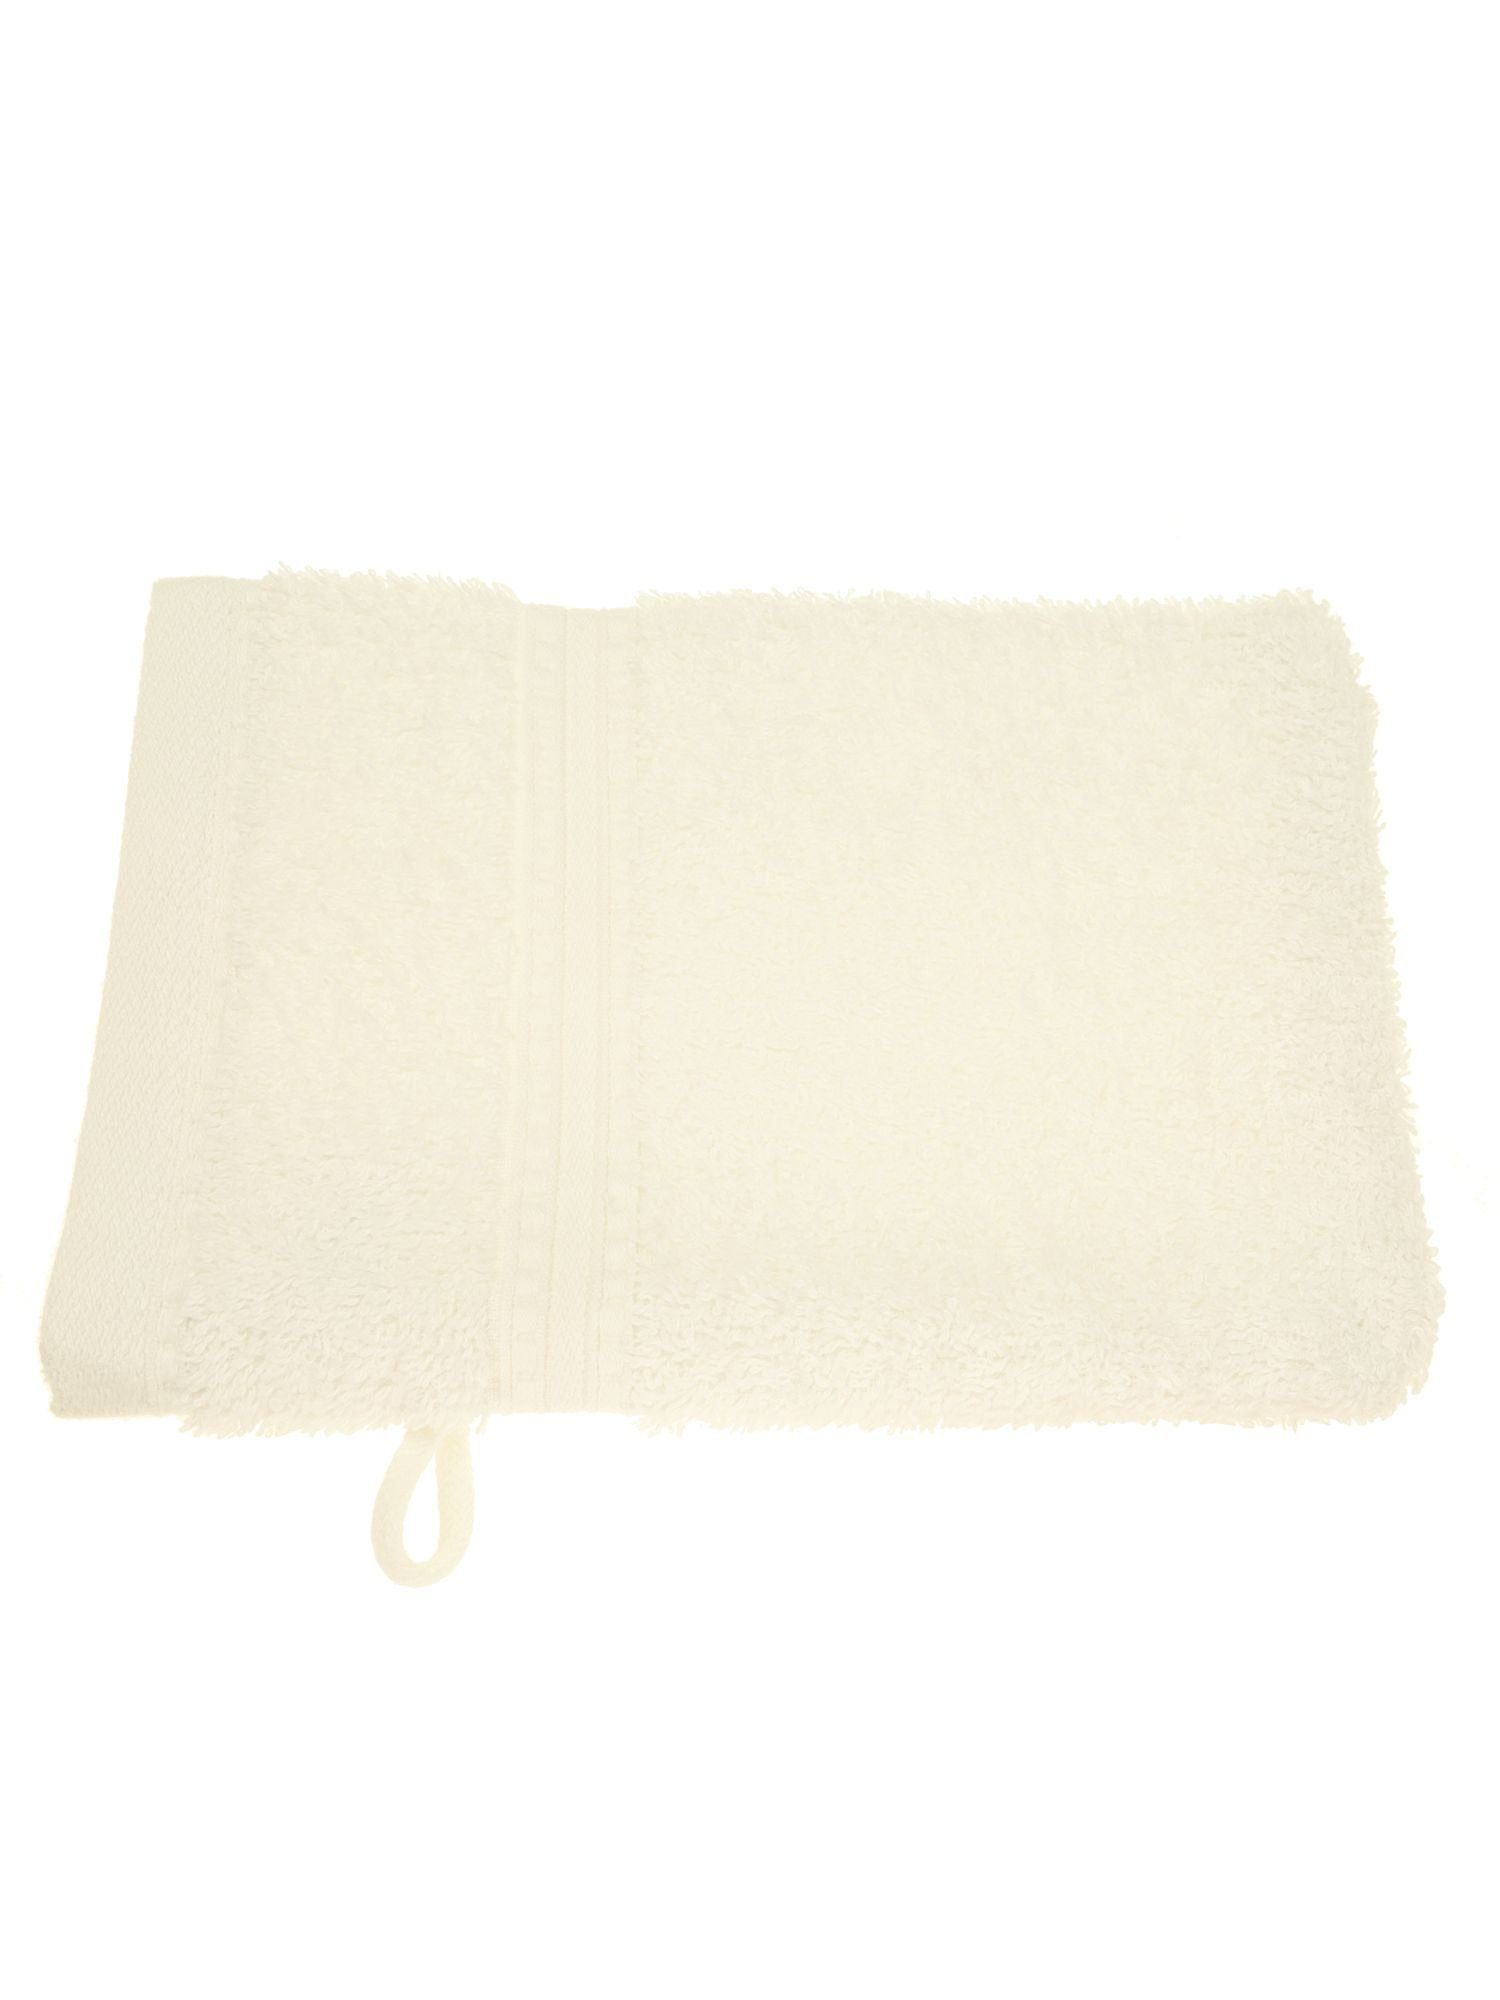 Julie Julsen Handtuch 1-Handtuch-Weiss-Waschhandschuh 15 x 21 cm, Bio-Baumwolle (1-St) | Kinderhandtücher